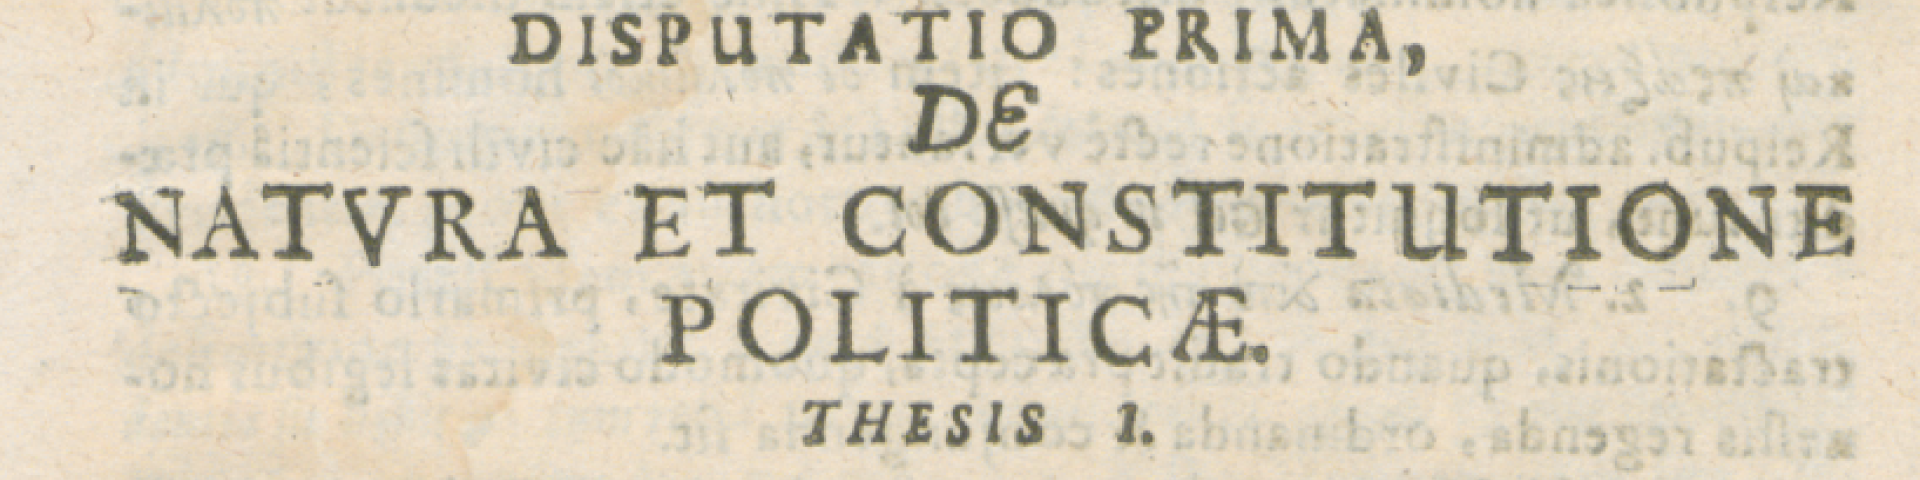 Disputatio Politica Prima PhD